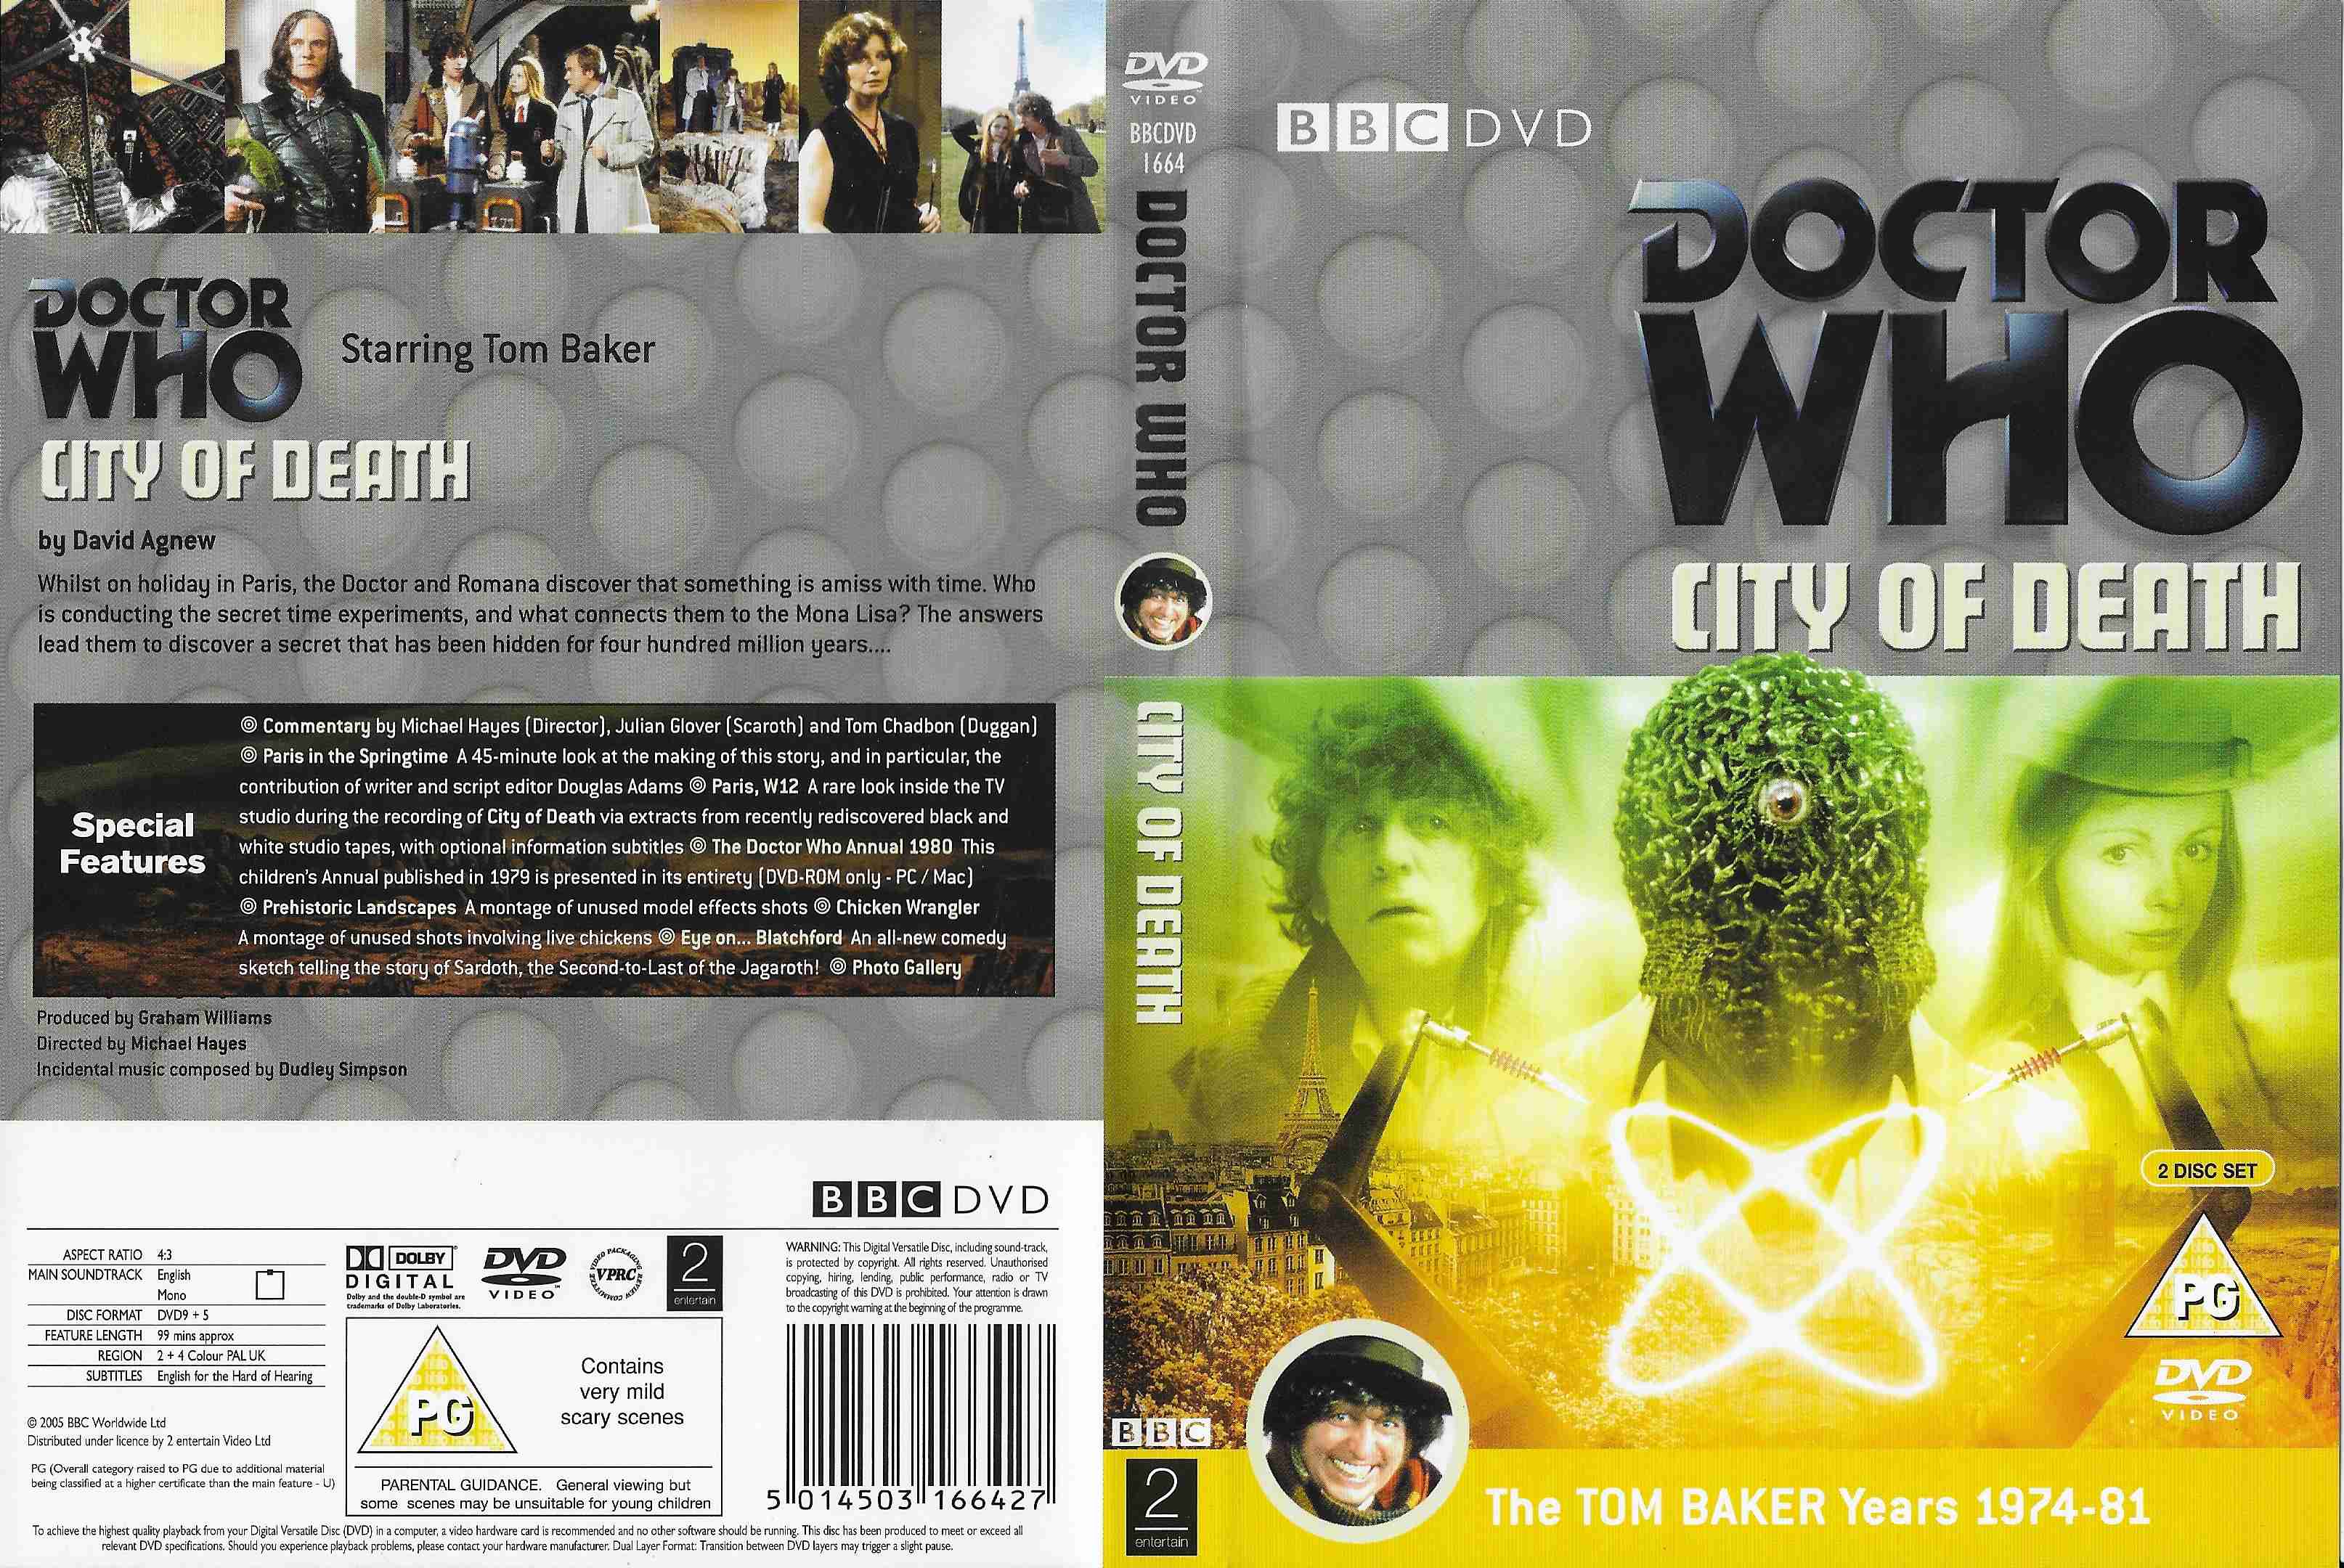 Back cover of BBCDVD 1664